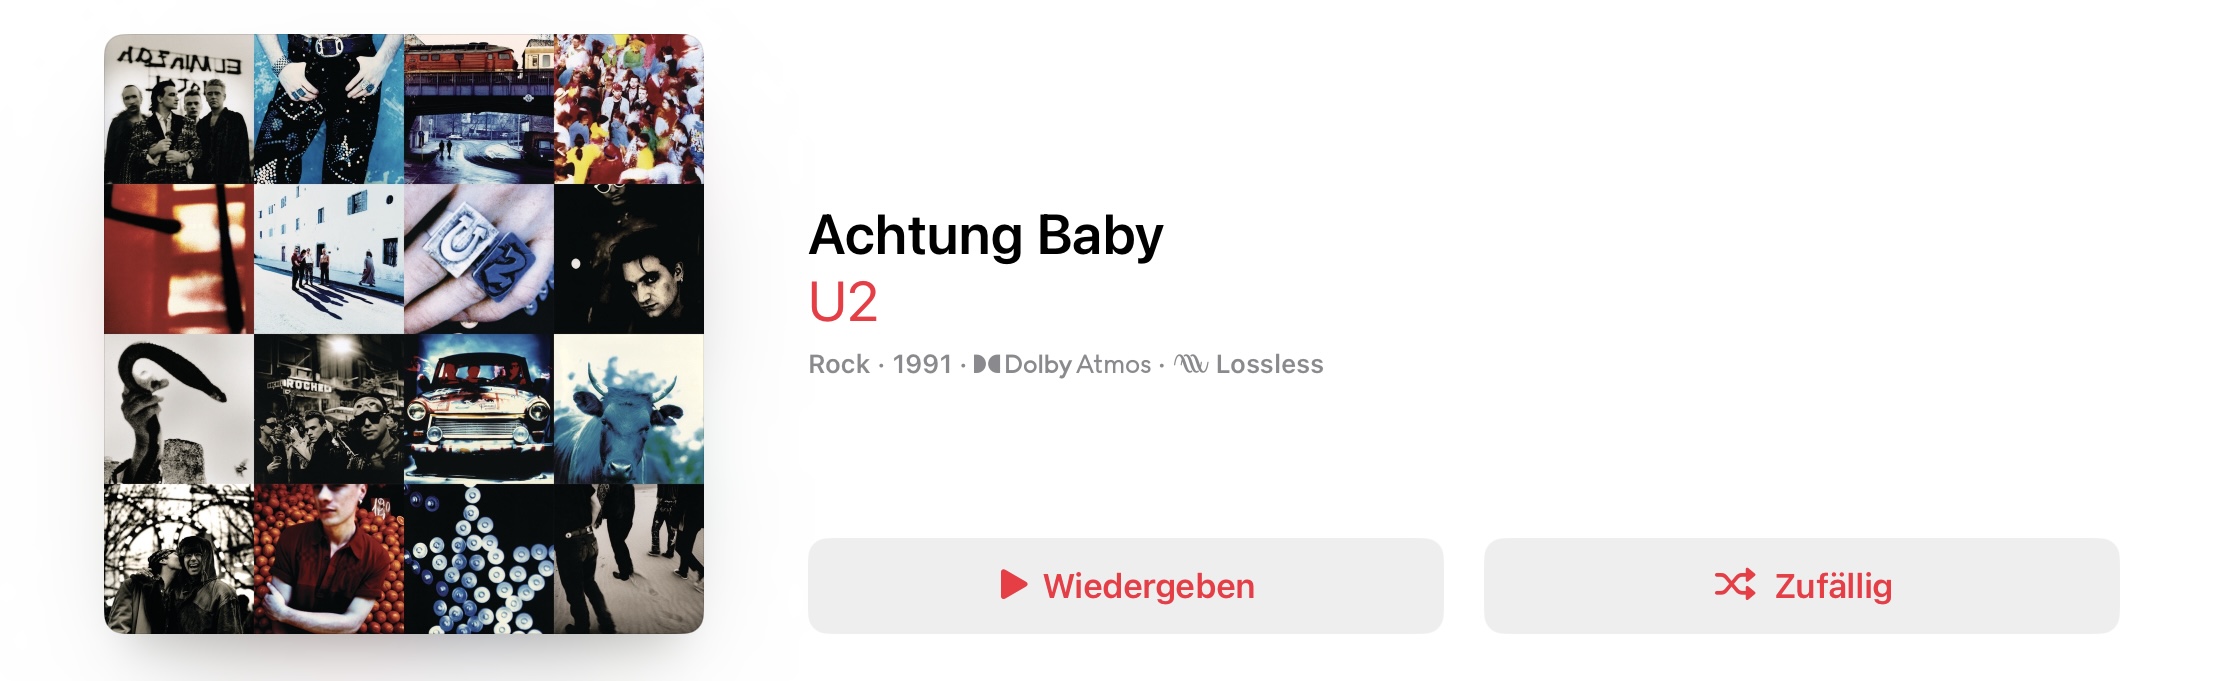 U2 Achtung Baby Dolby Atmos